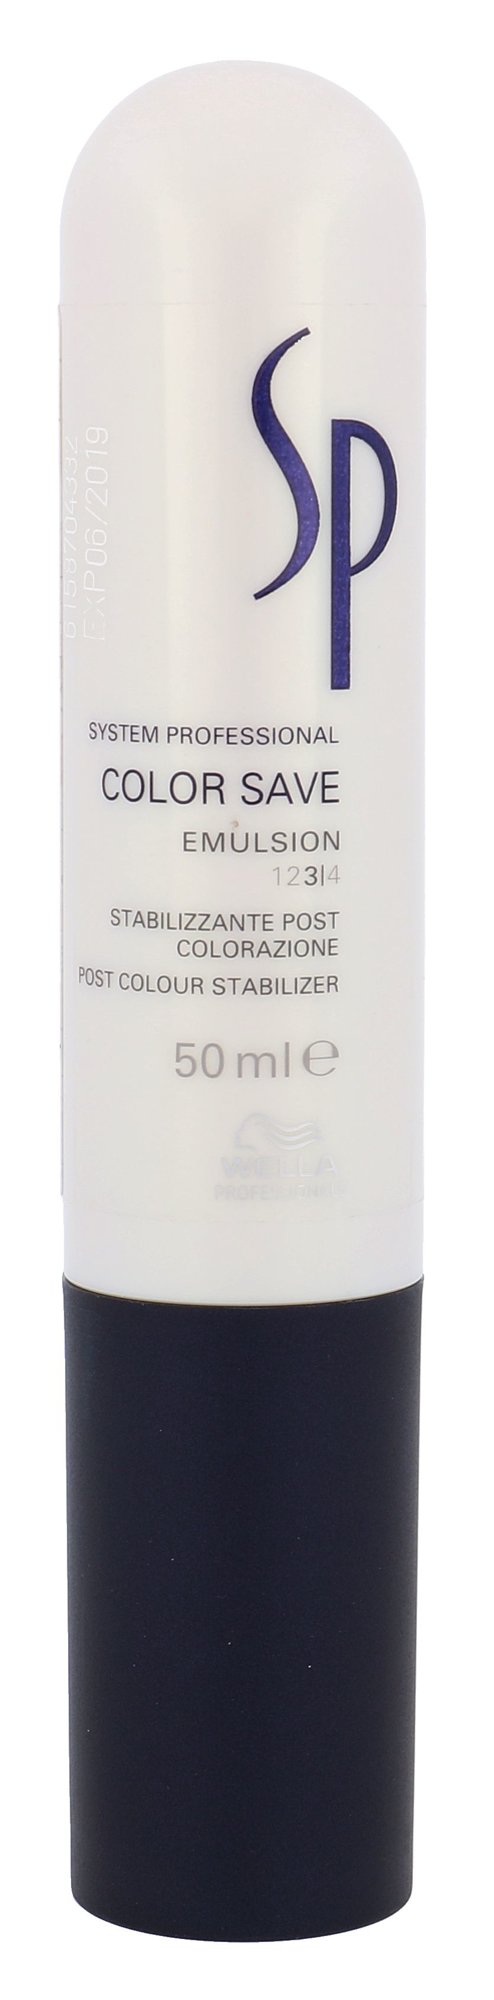 Wella SP Color Save Emulsion